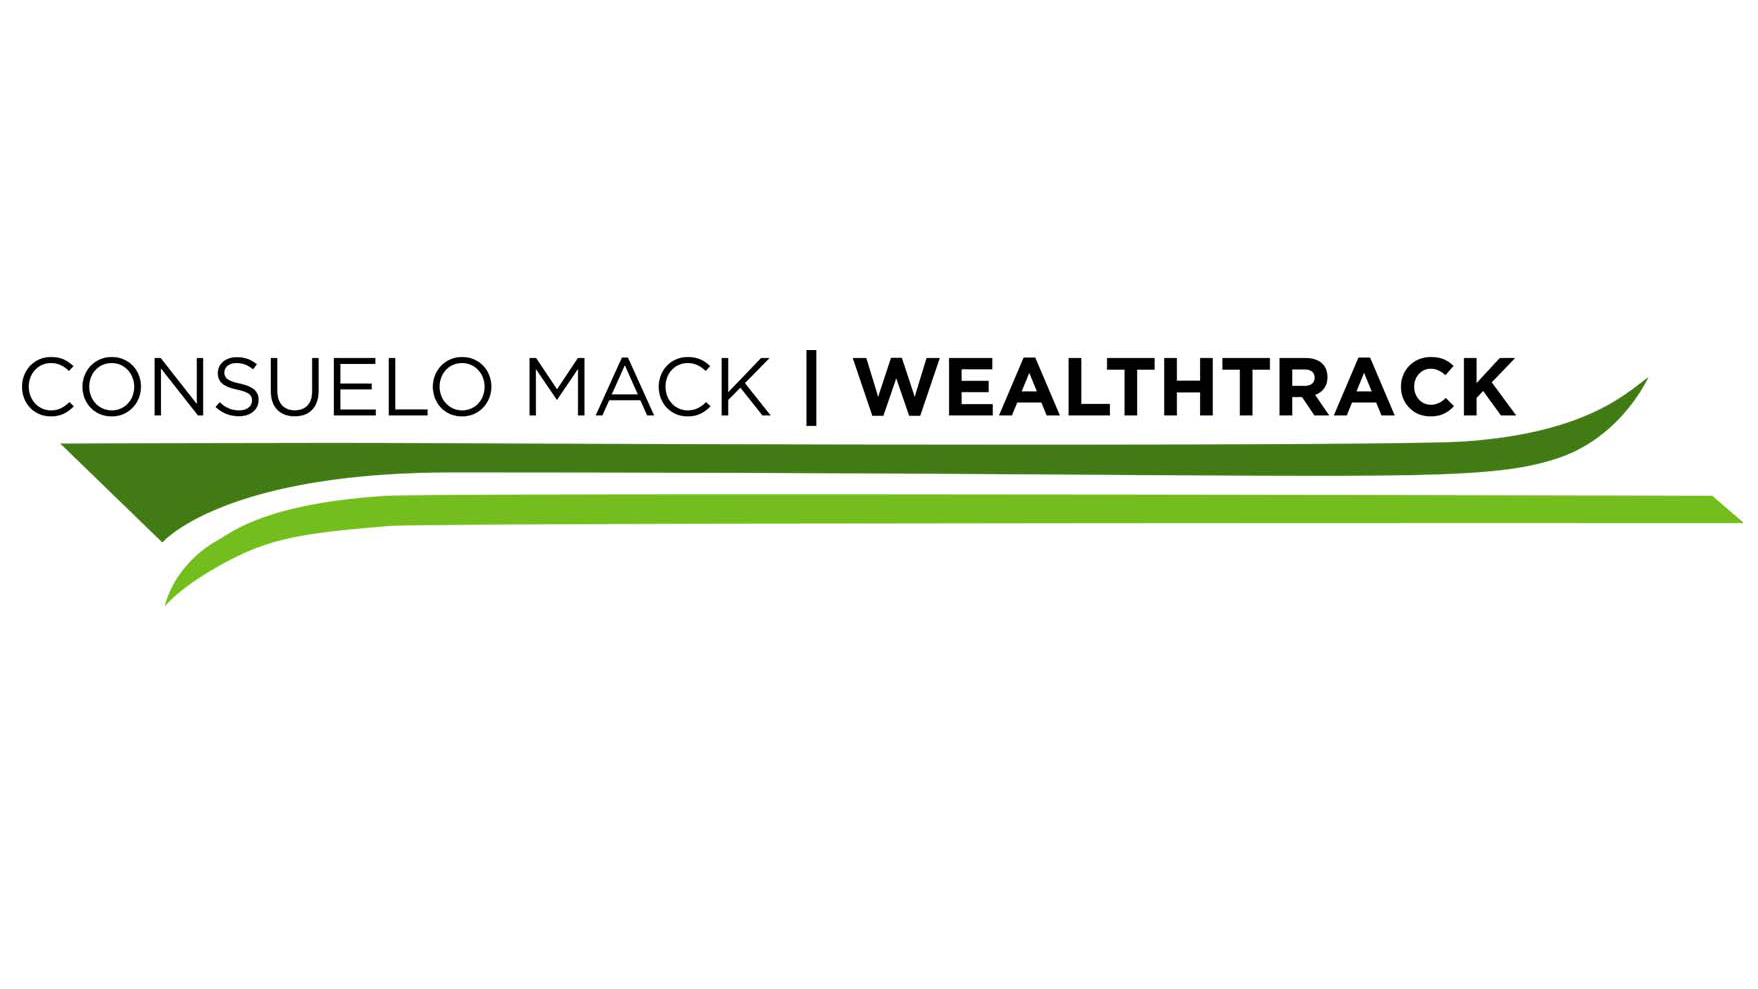 Consuelo Mack WealthTrack logo